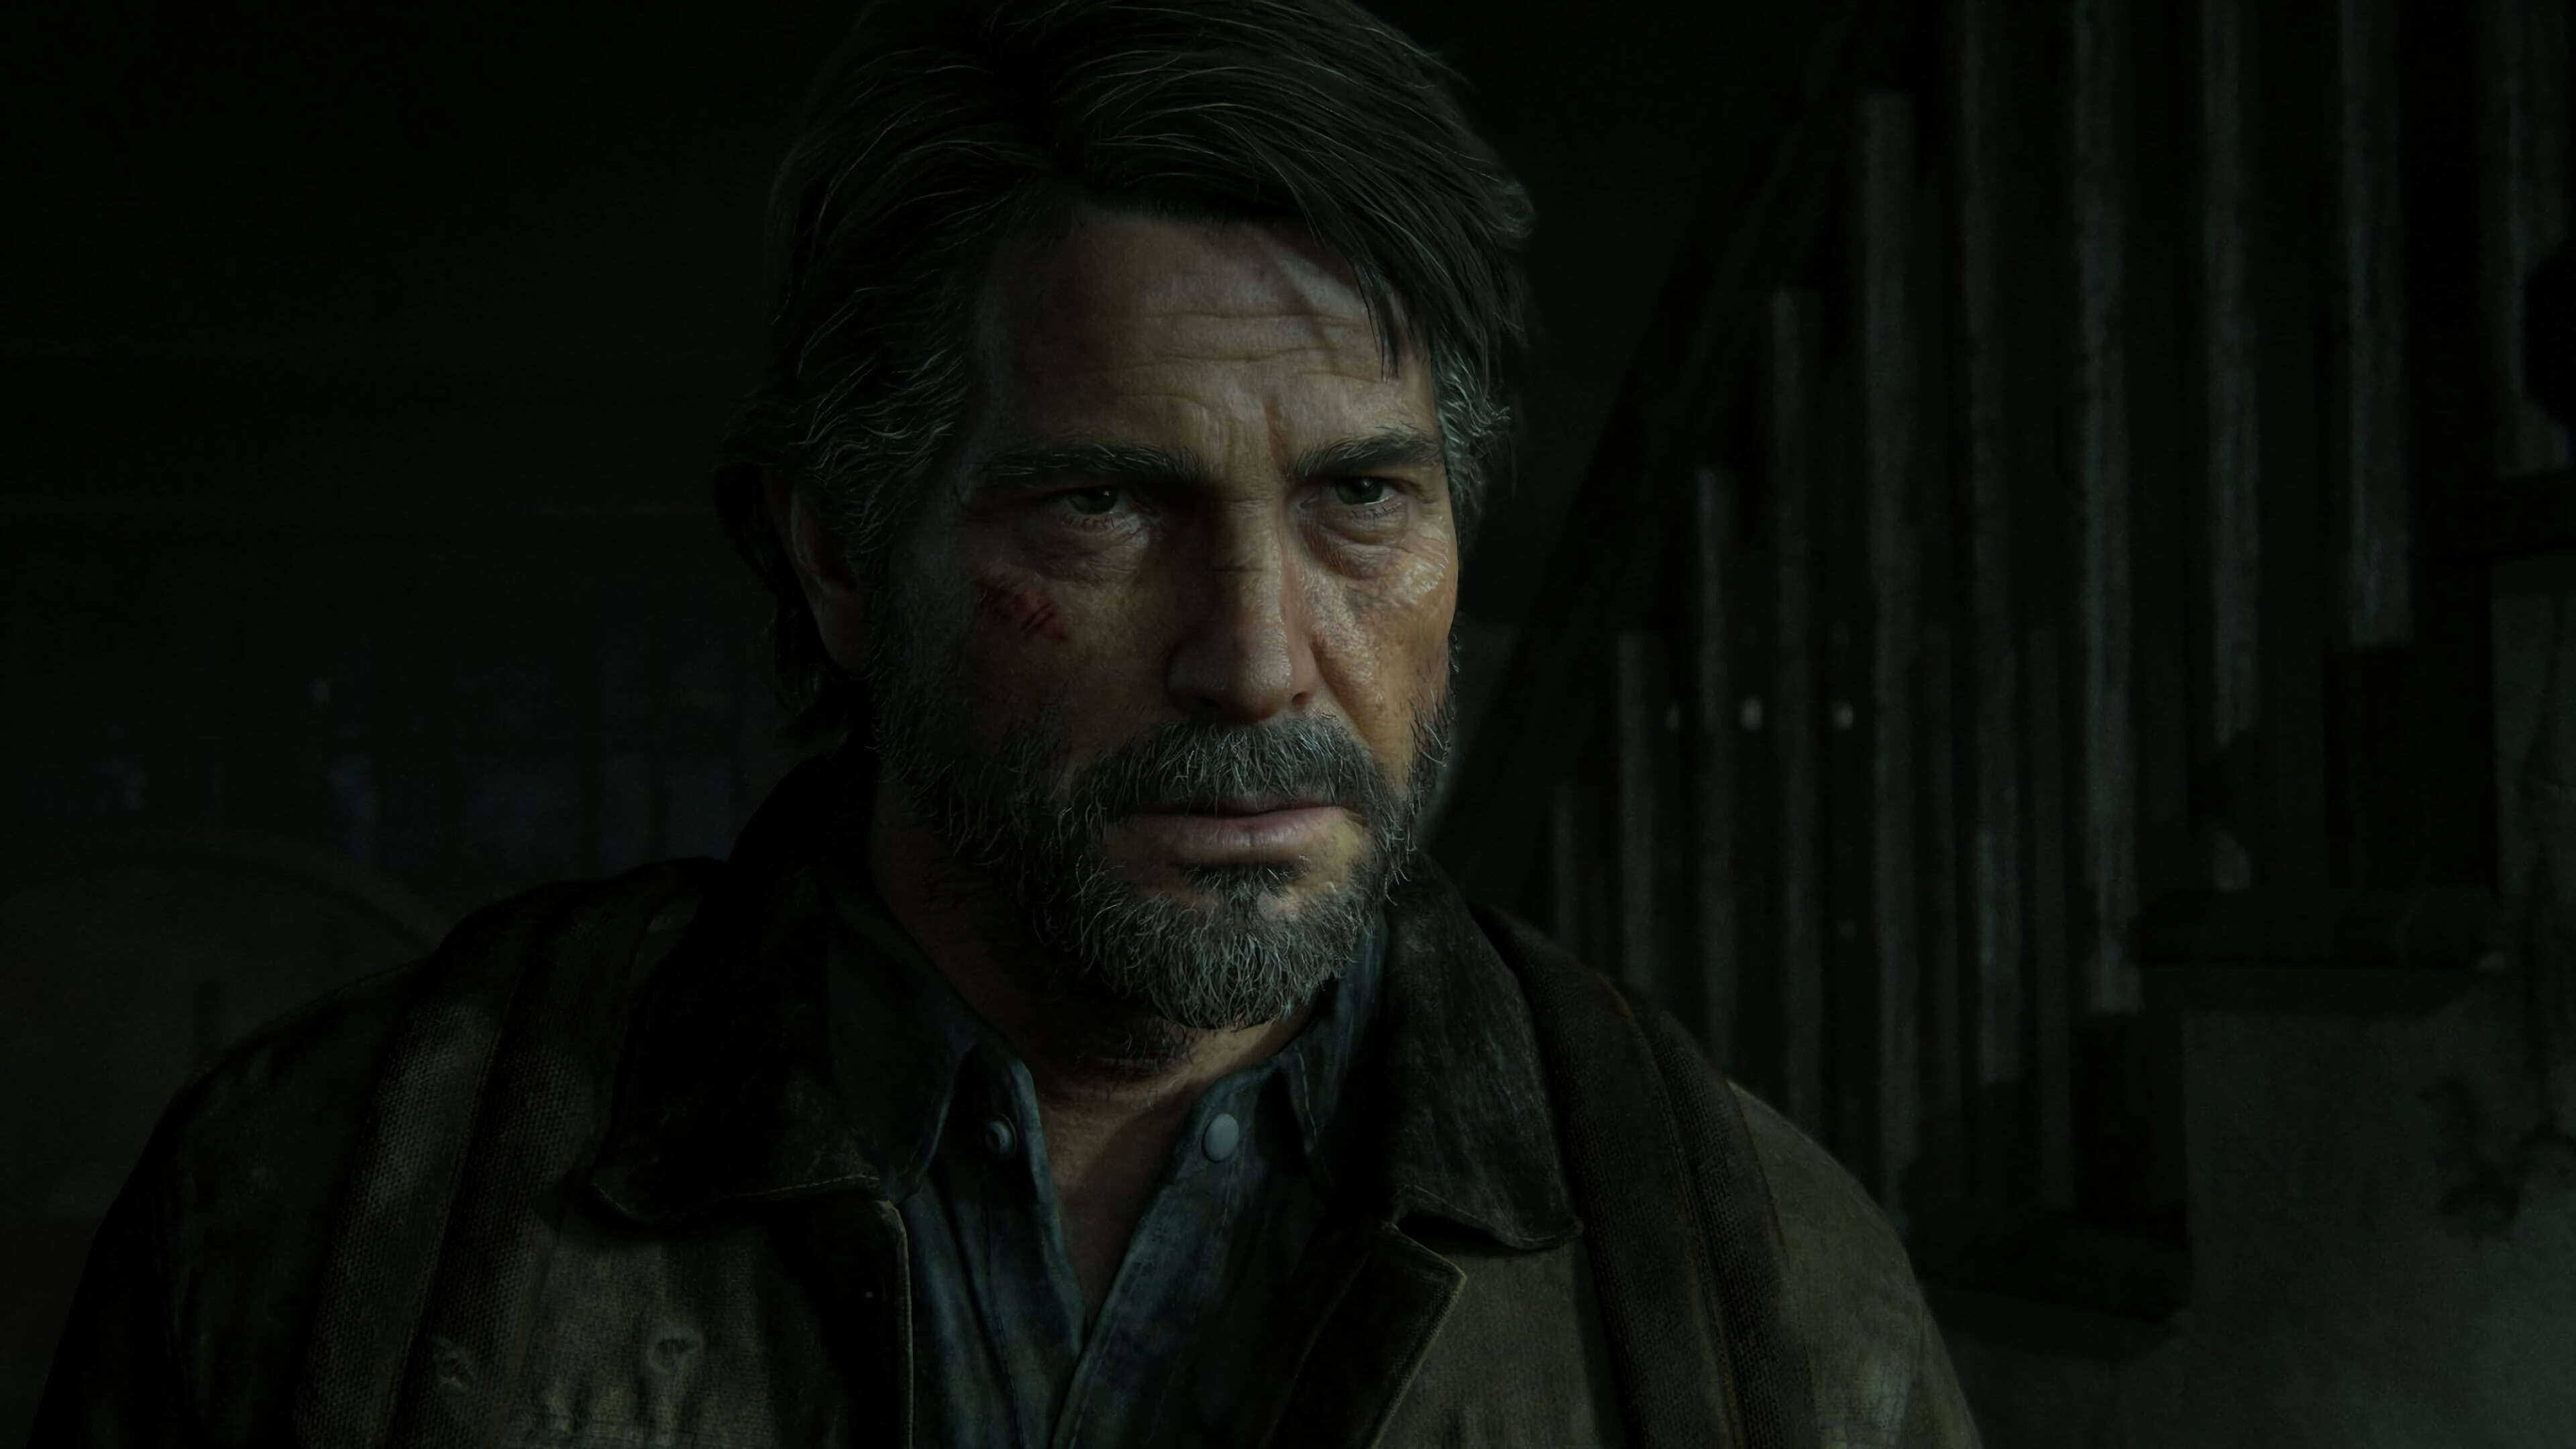 The Last of Us Part II 1080P, 2K, 4K, 5K HD wallpapers free